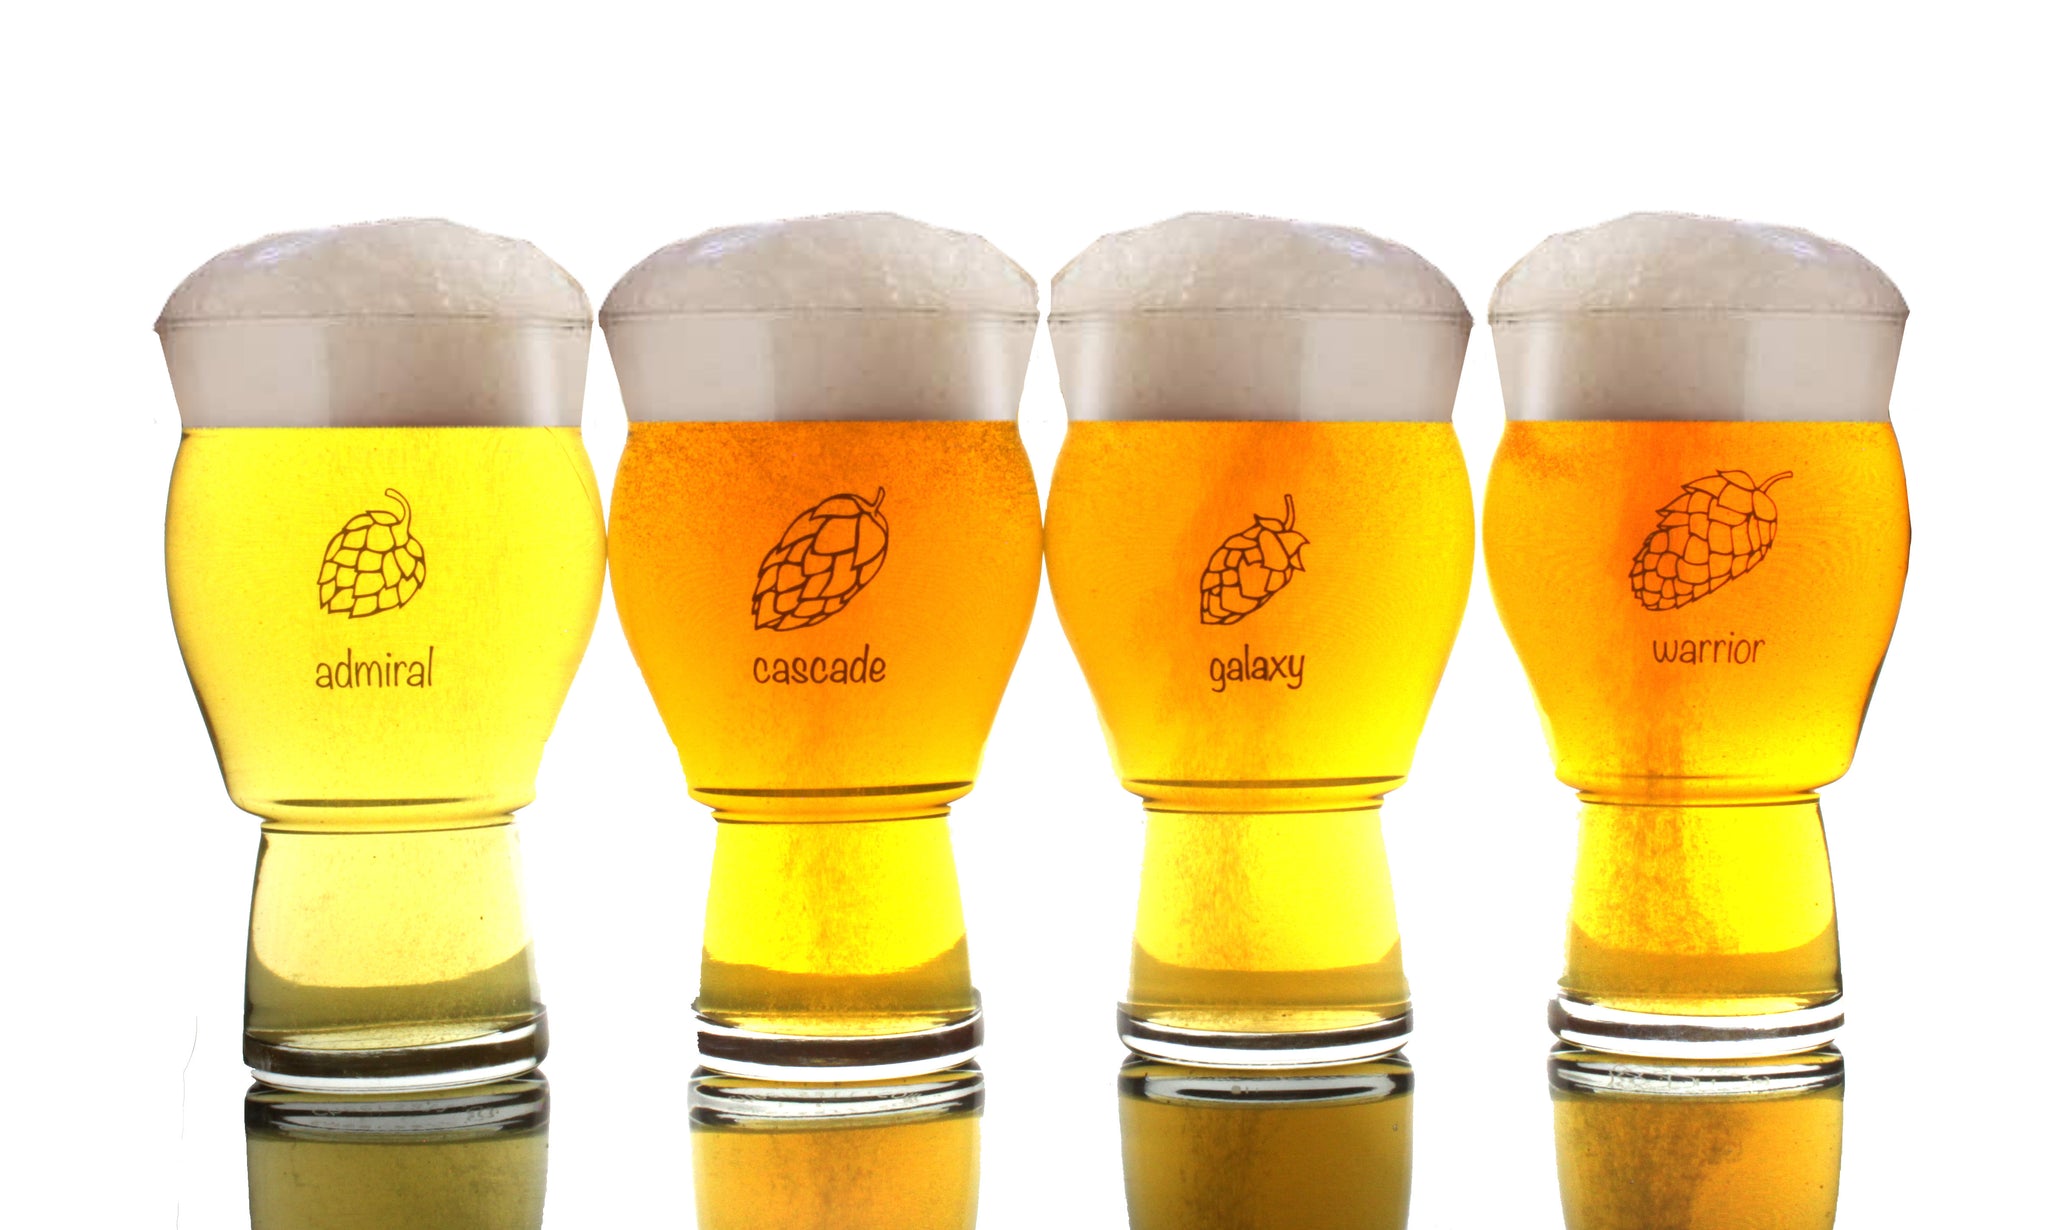 Jumbo Craft Pilsner Beer Glasses - 24 oz - Set of 2